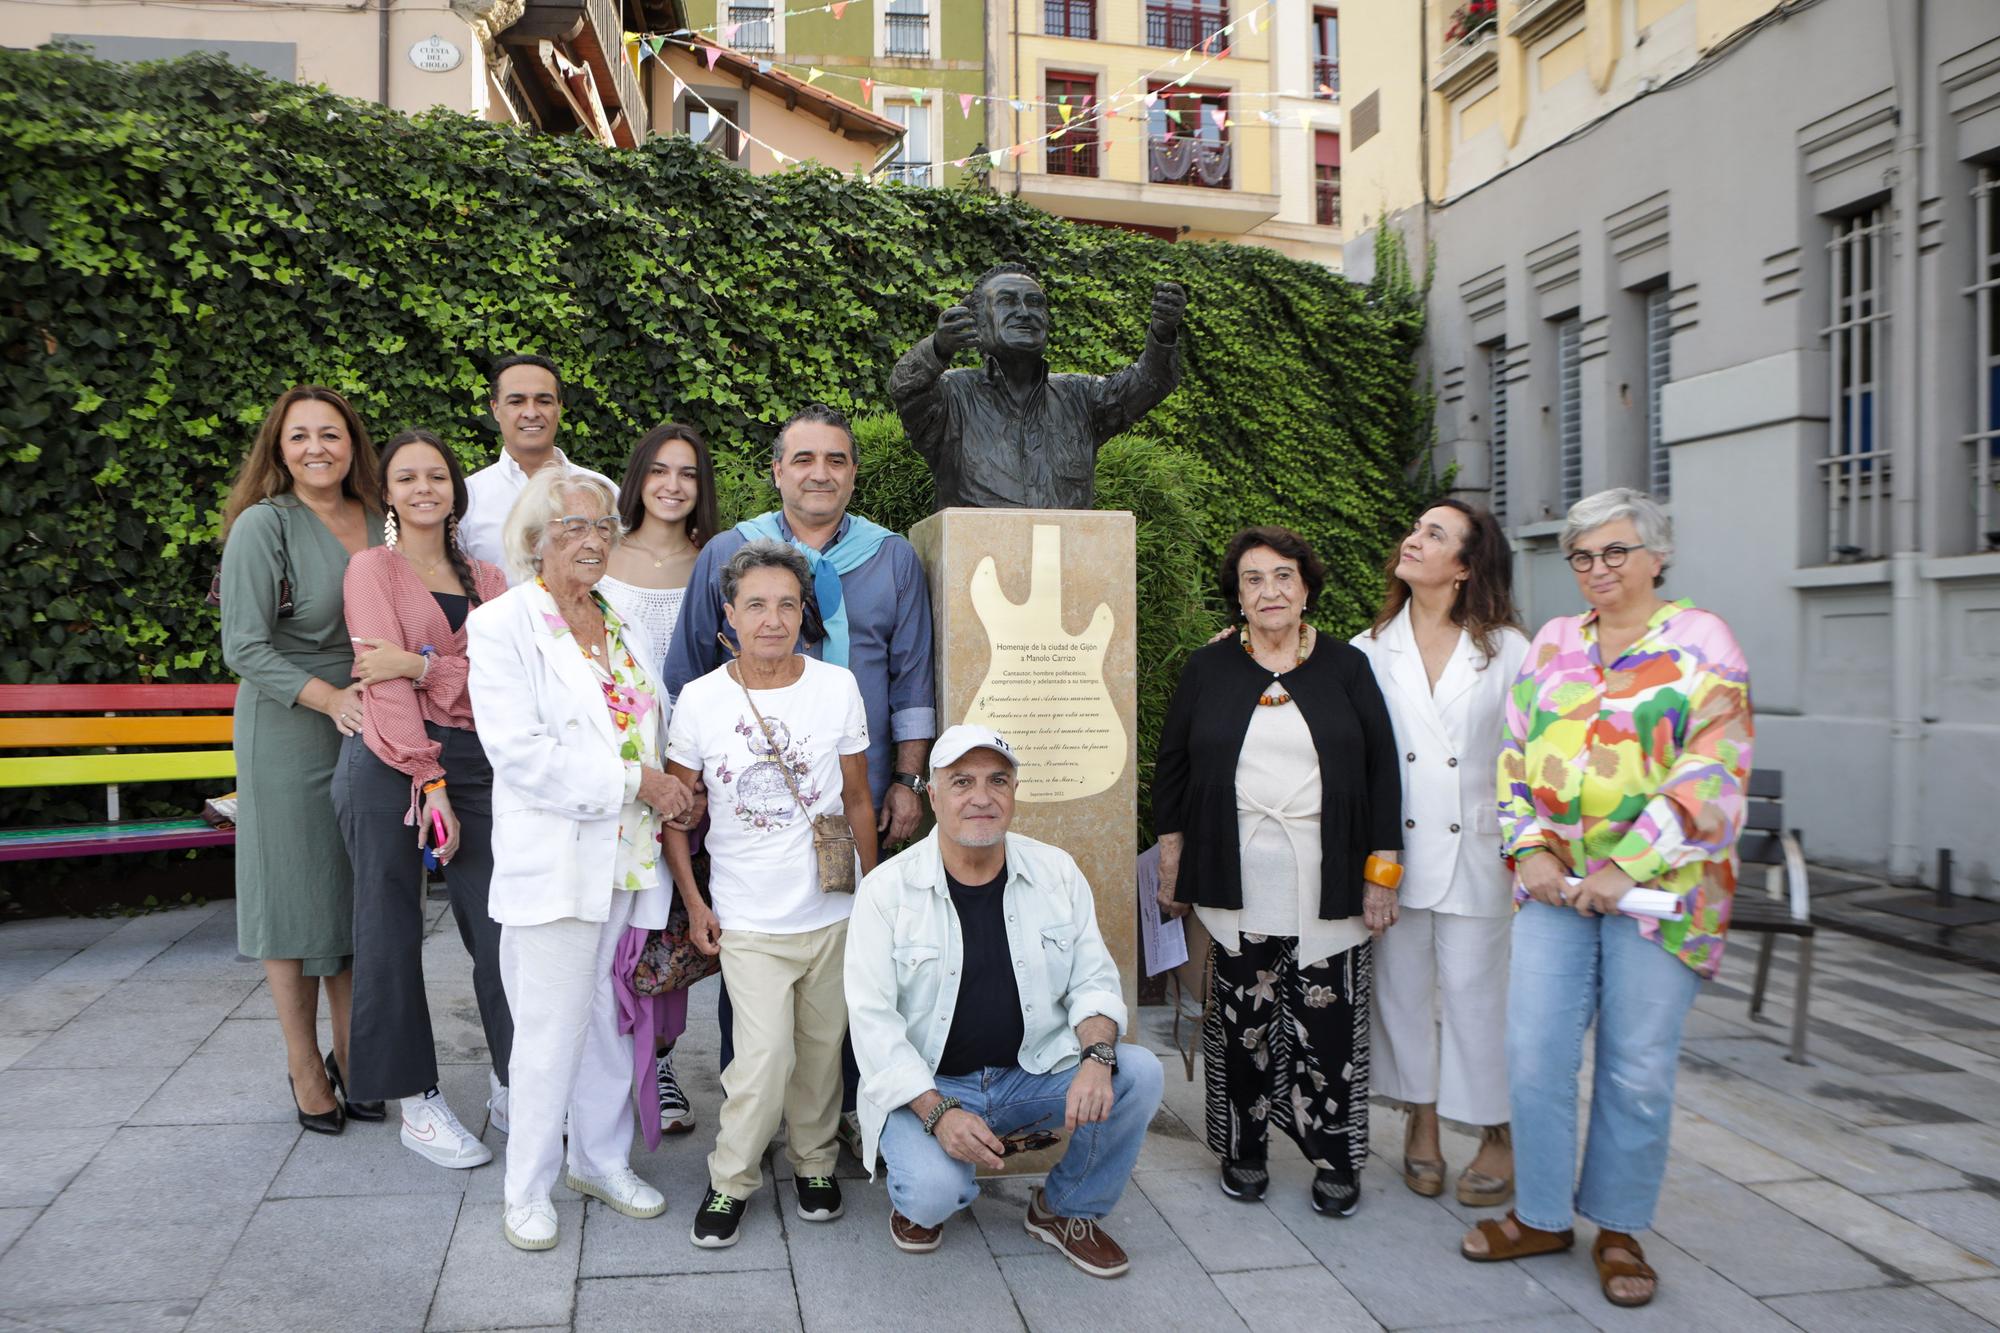 Cimadevilla inaugura el busto en honor a Manolo Carrizo